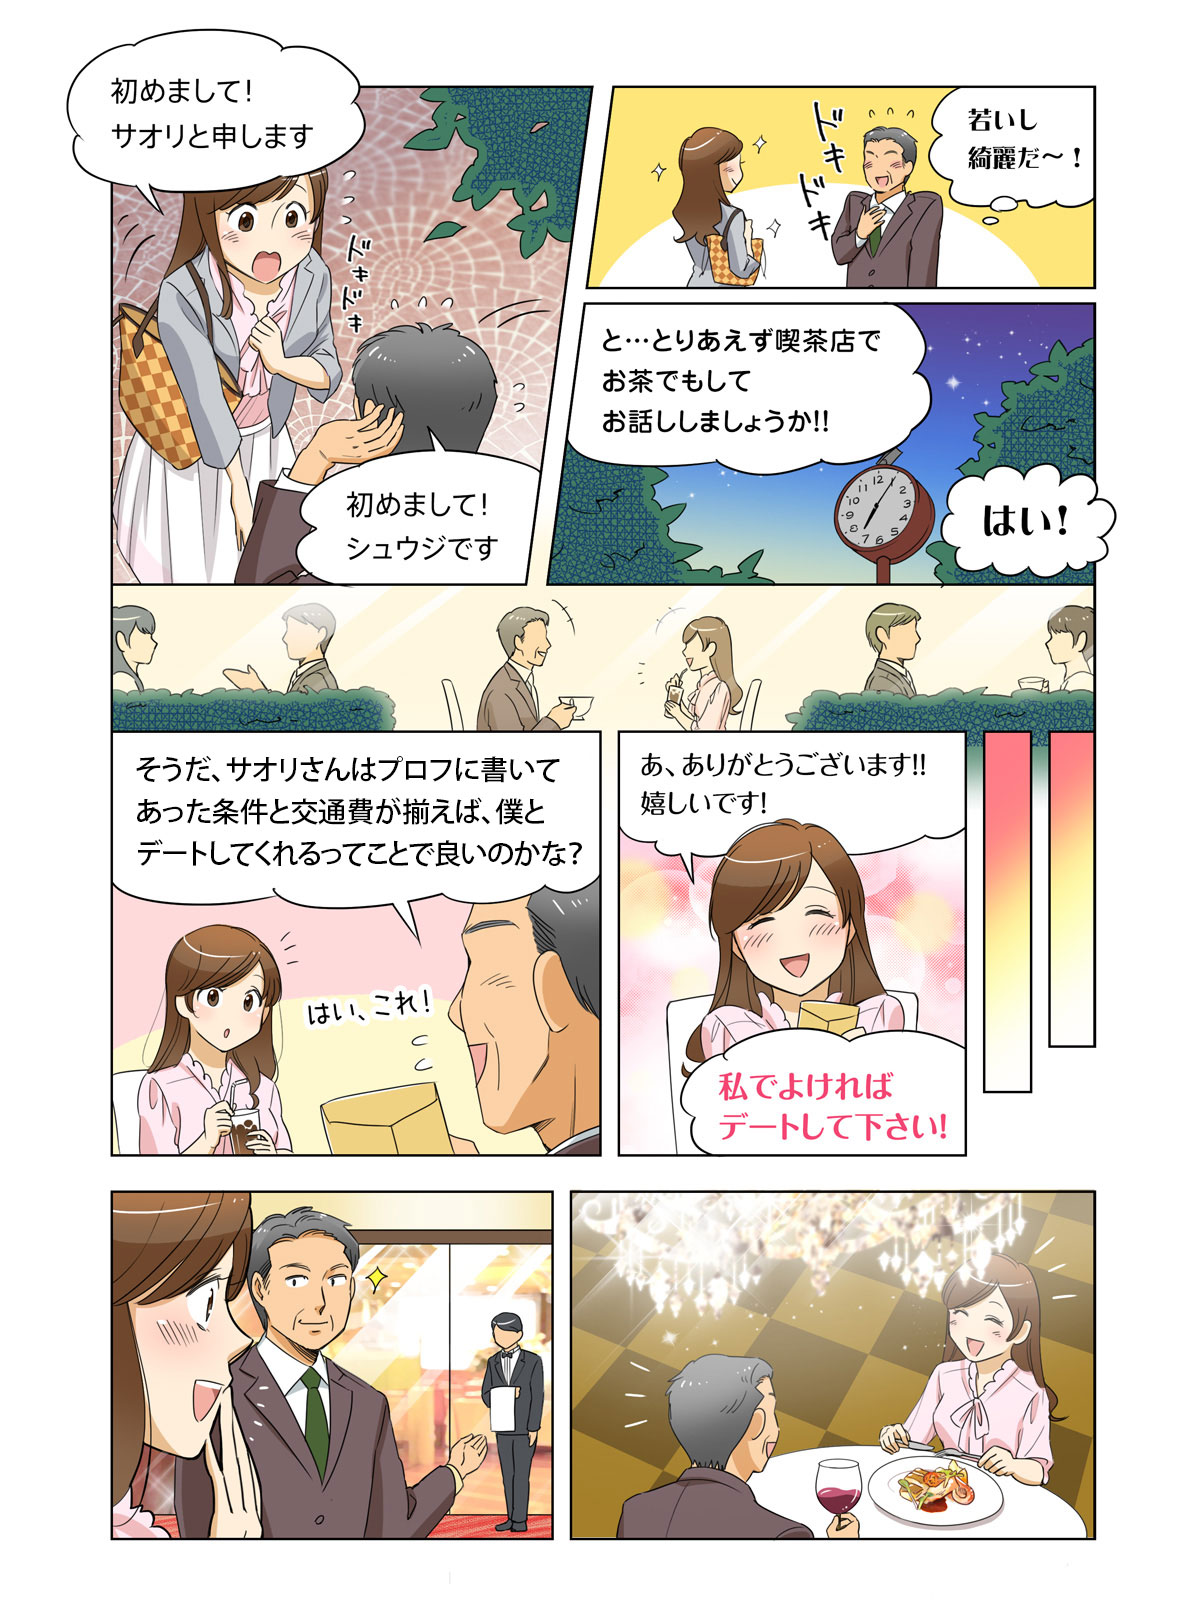 漫画で交際倶楽部を解説3